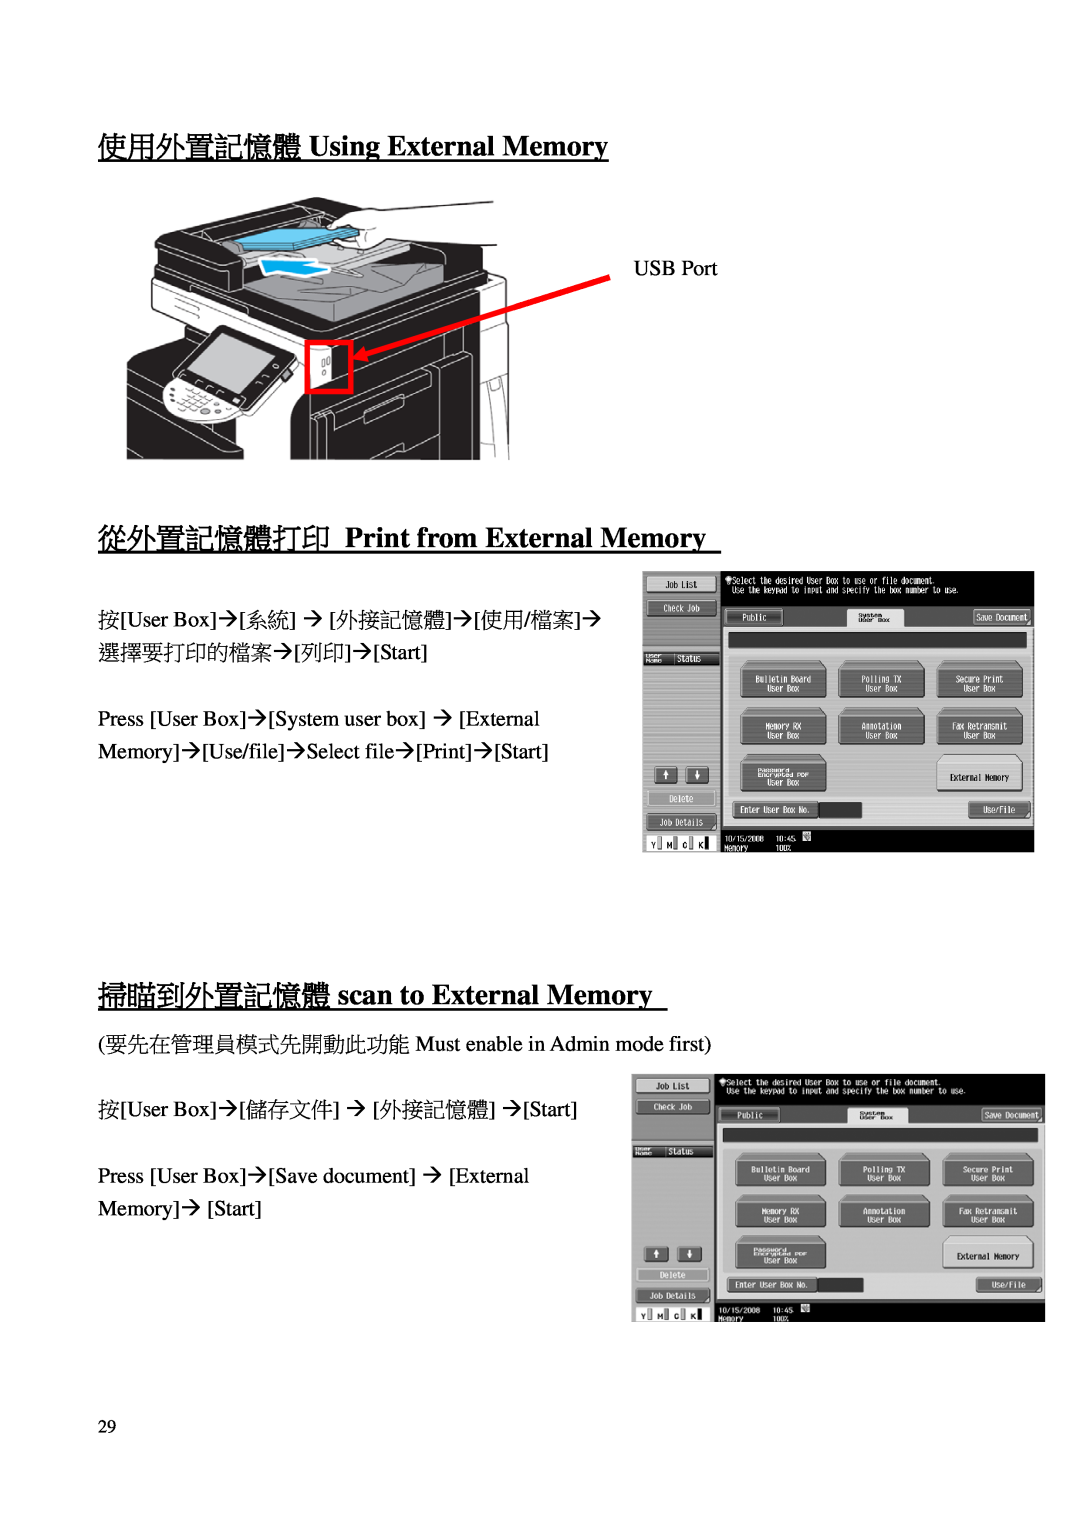 Konica Minolta C452 使用外置記憶體 Using External Memory, 從外置記憶體打印 Print from External Memory, 掃瞄到外置記憶體 scan to External Memory 